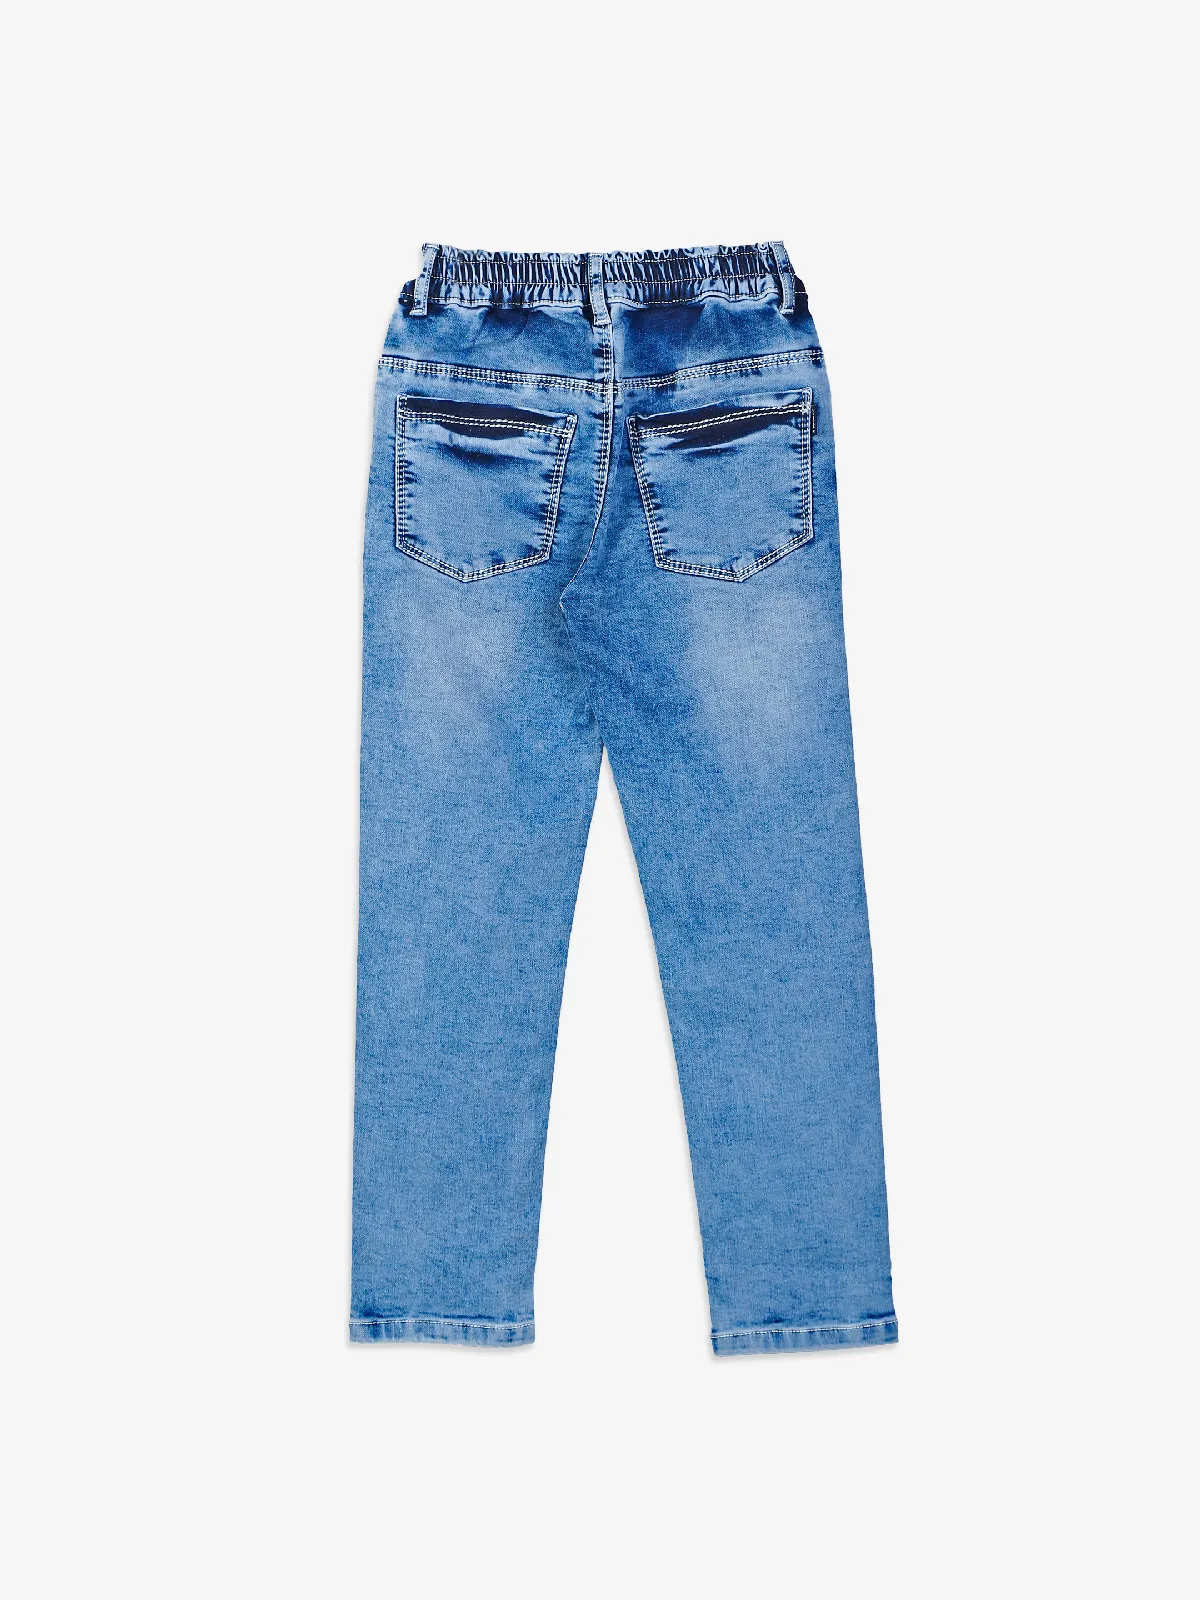 Tadpole ice blue washed jeans